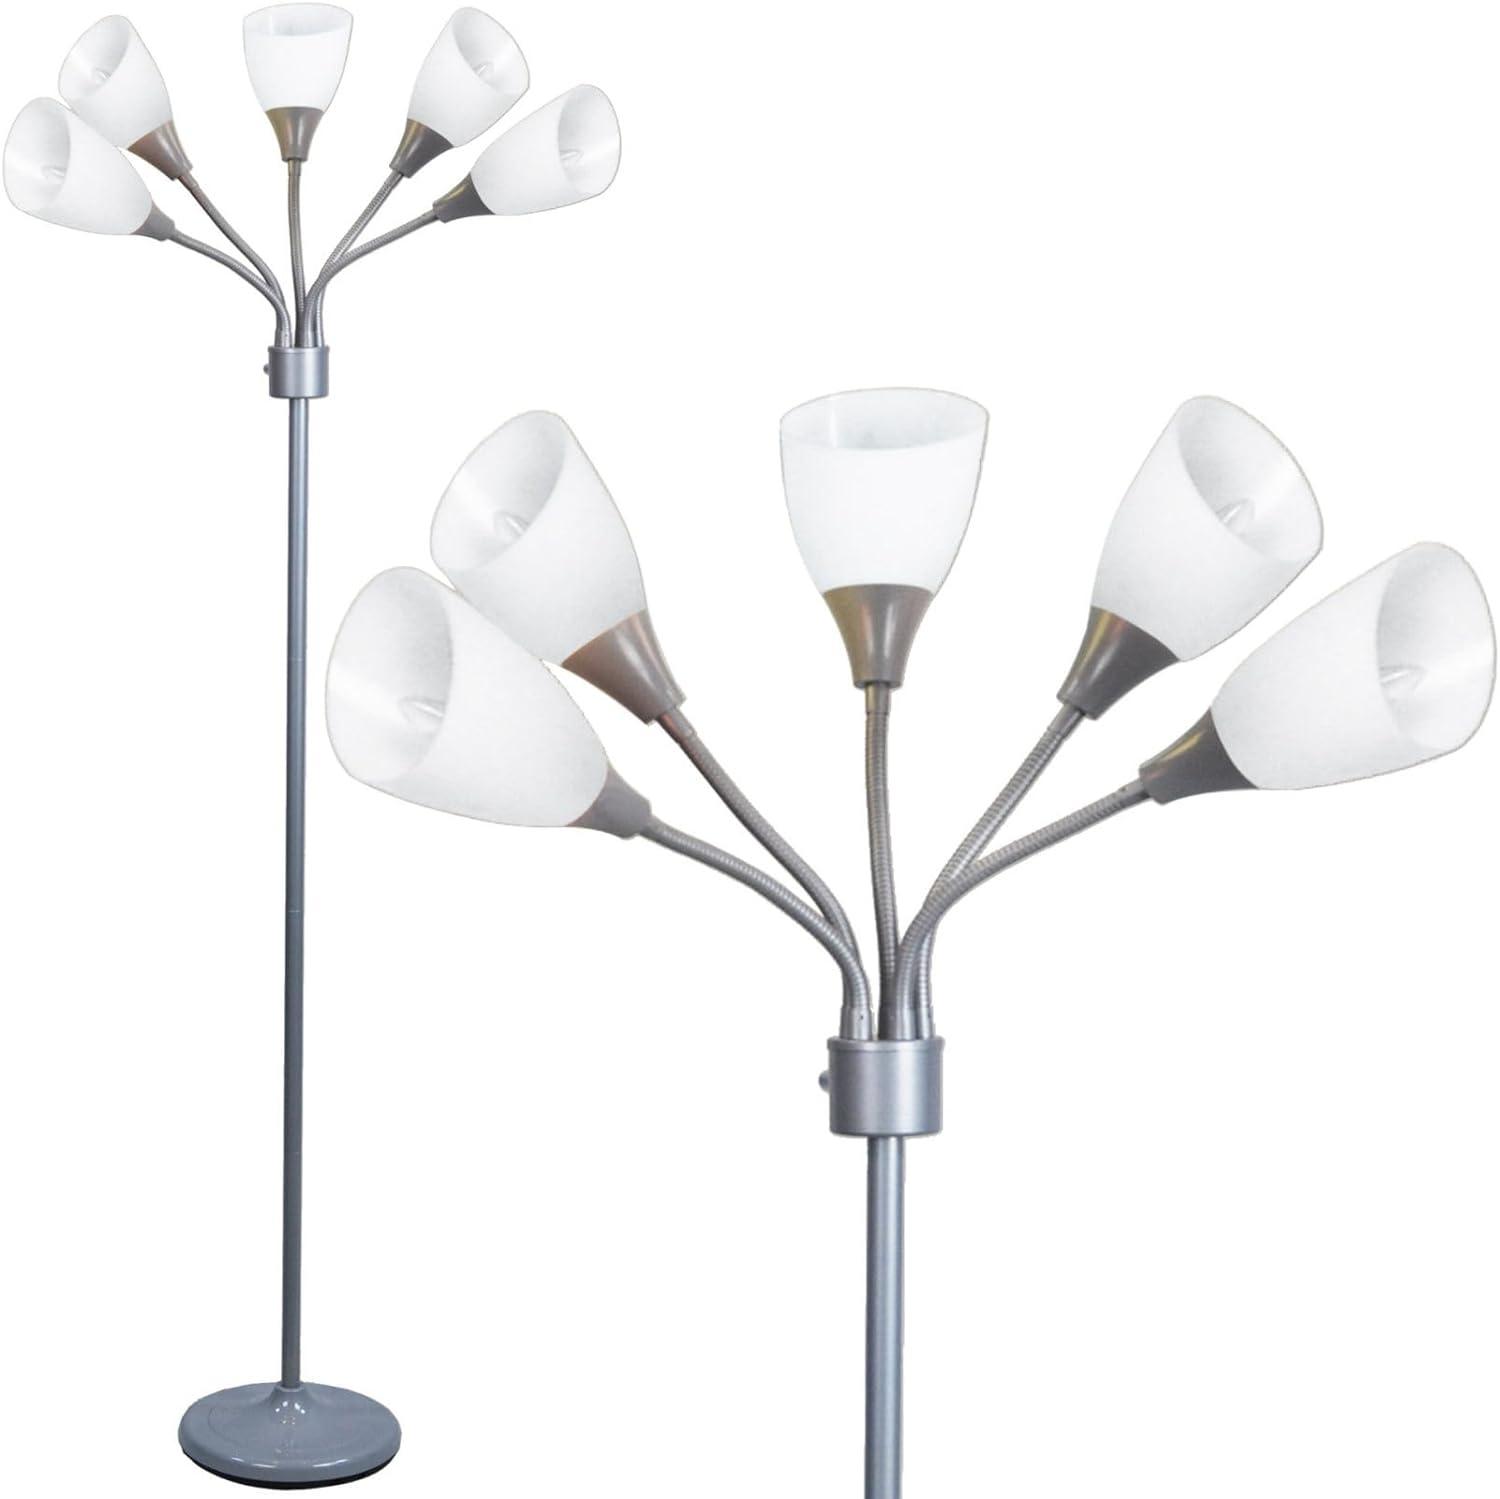 Medusa Adjustable Multi-Head Gray Floor Lamp with White Acrylic Shades